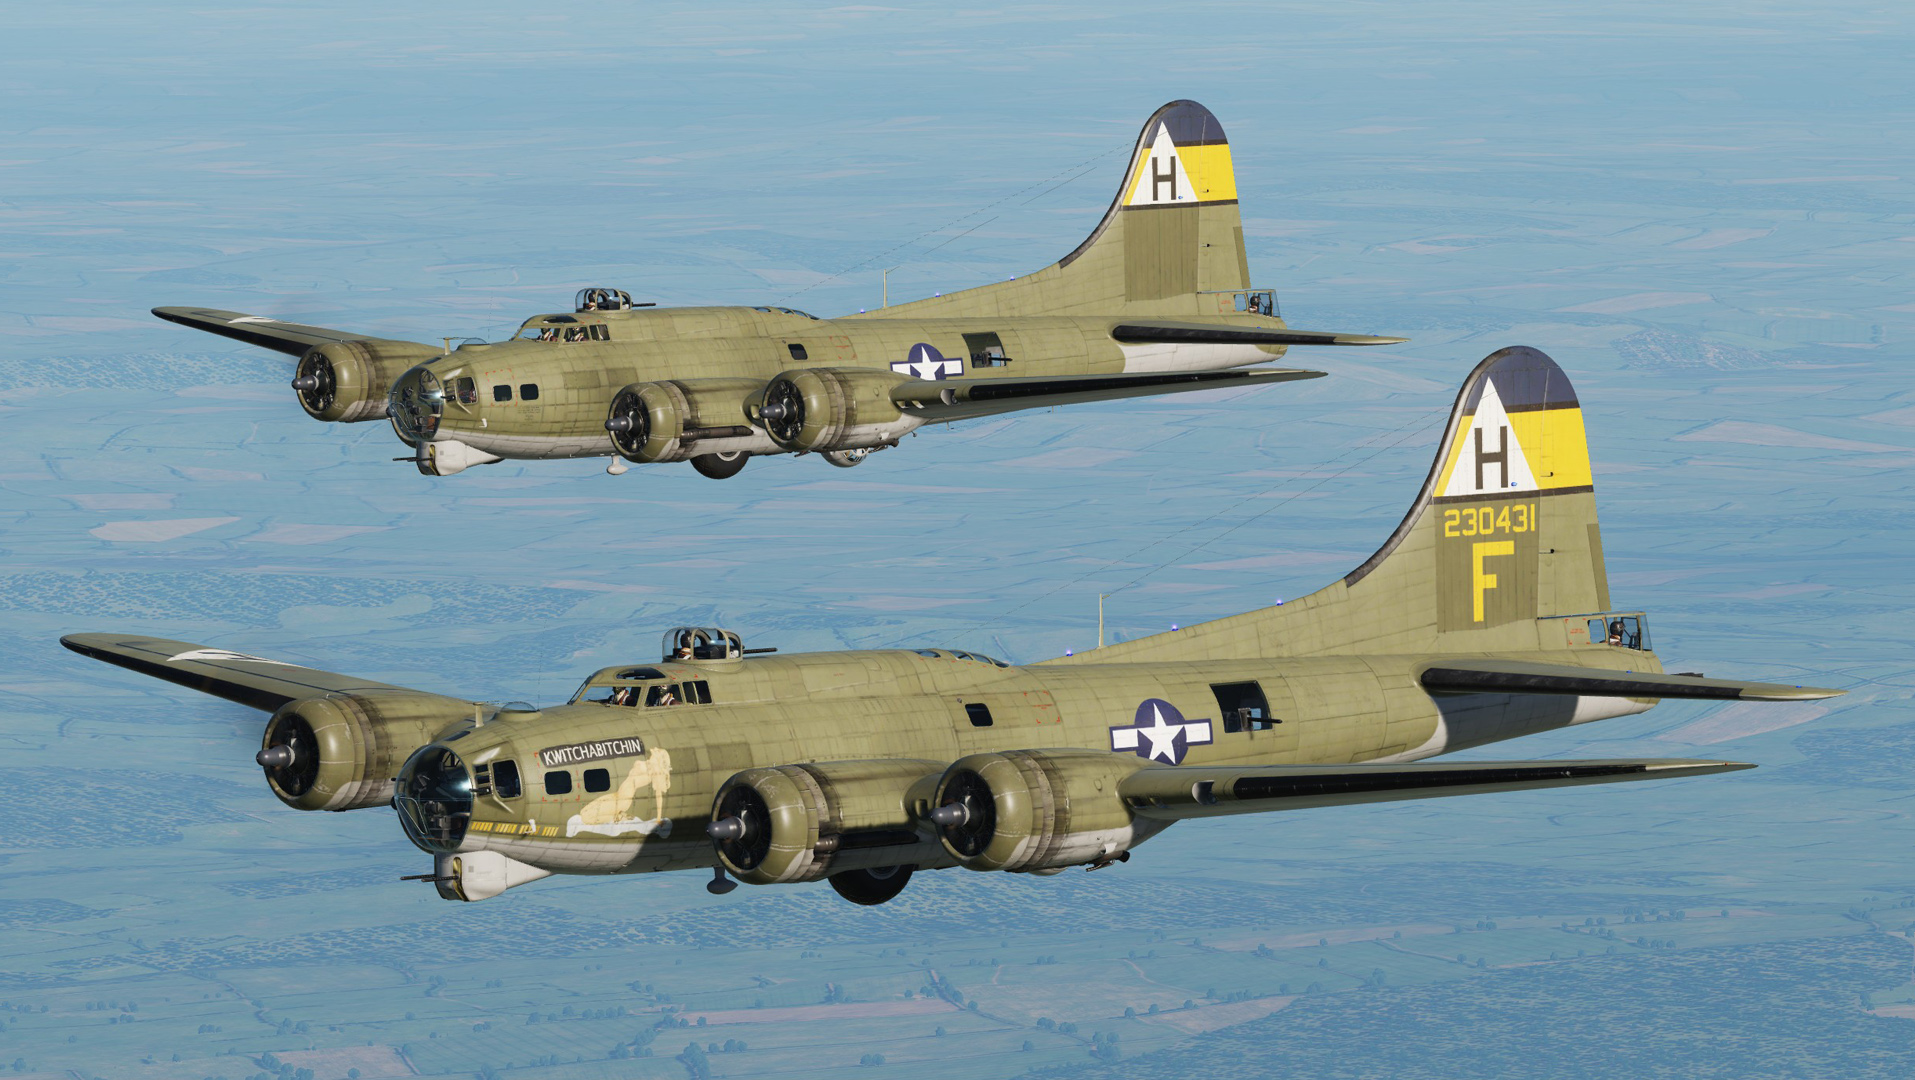 B-17G 42-30431 “Kwitchabitchin”